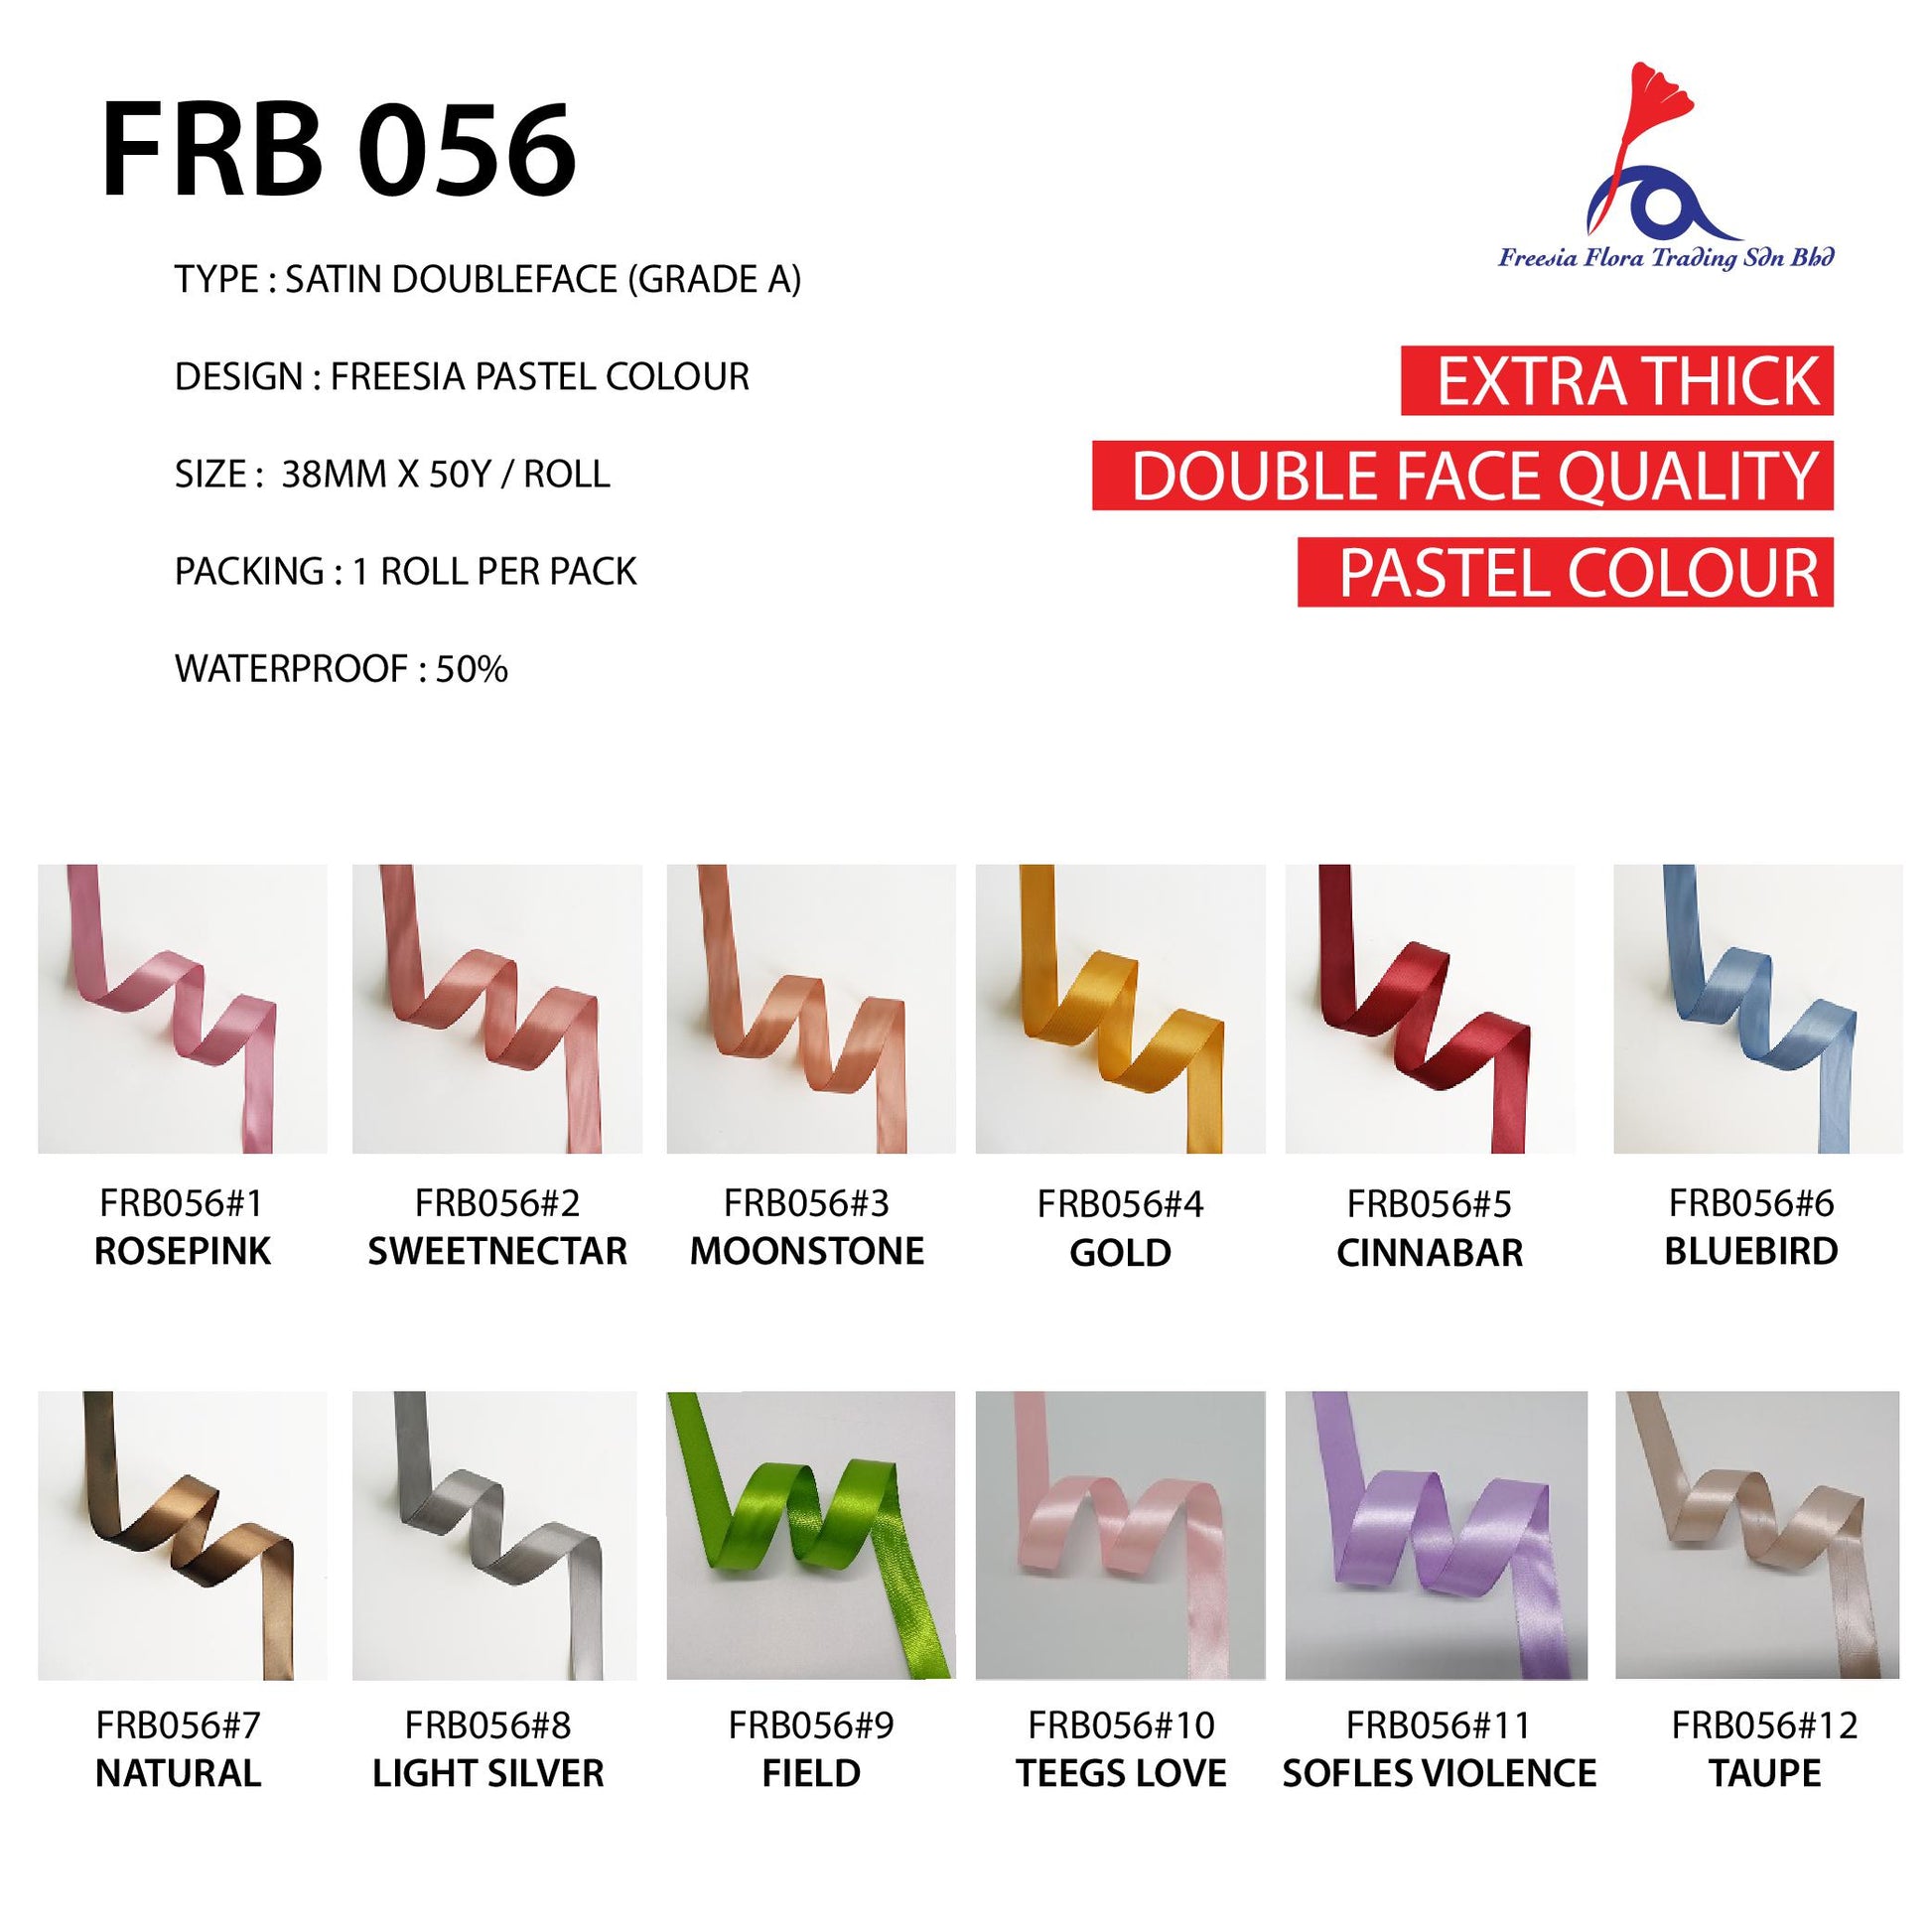 FRB056 Pastel Grade A Satin - Freesia